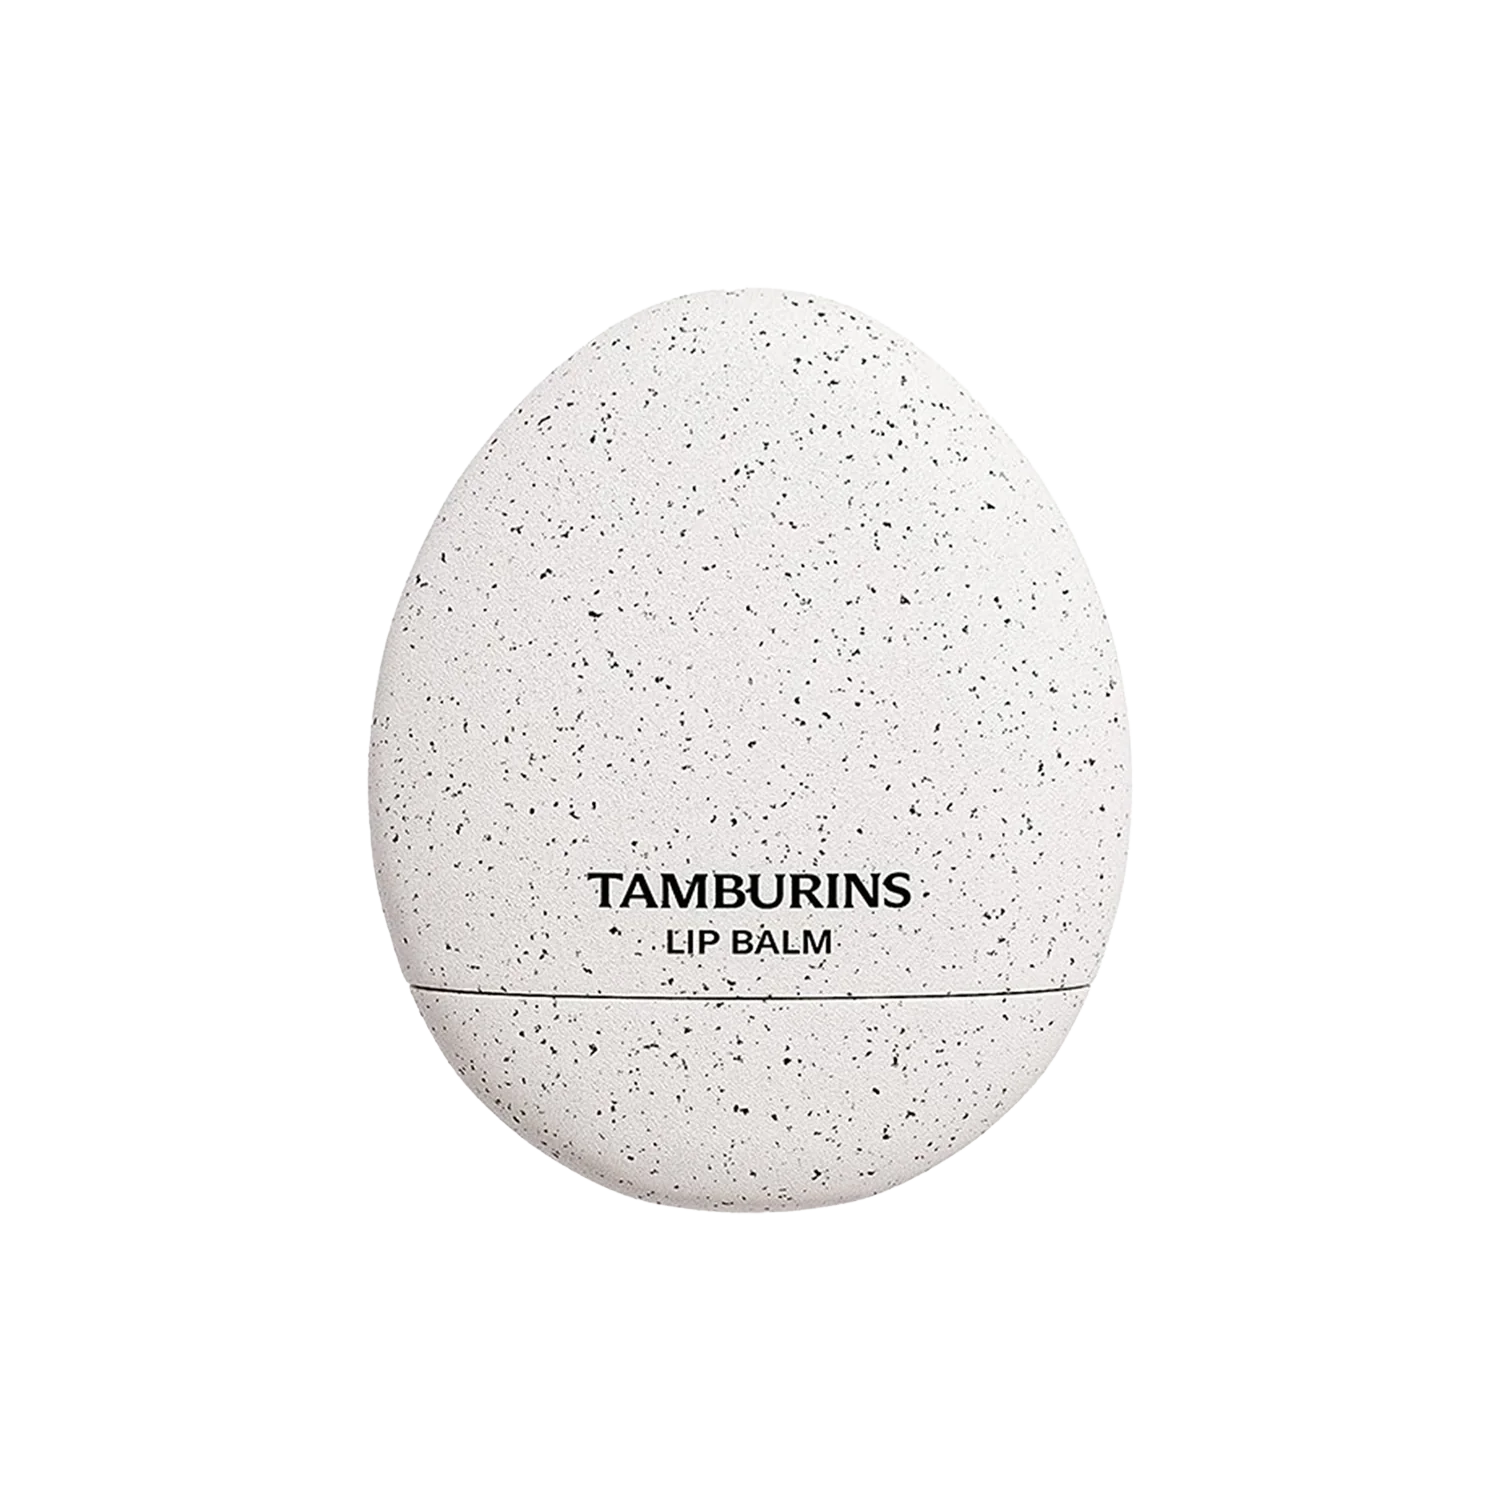 Tamburins Egg Lip Balm - Milk Tea (5g) - Best Buy World Singapore